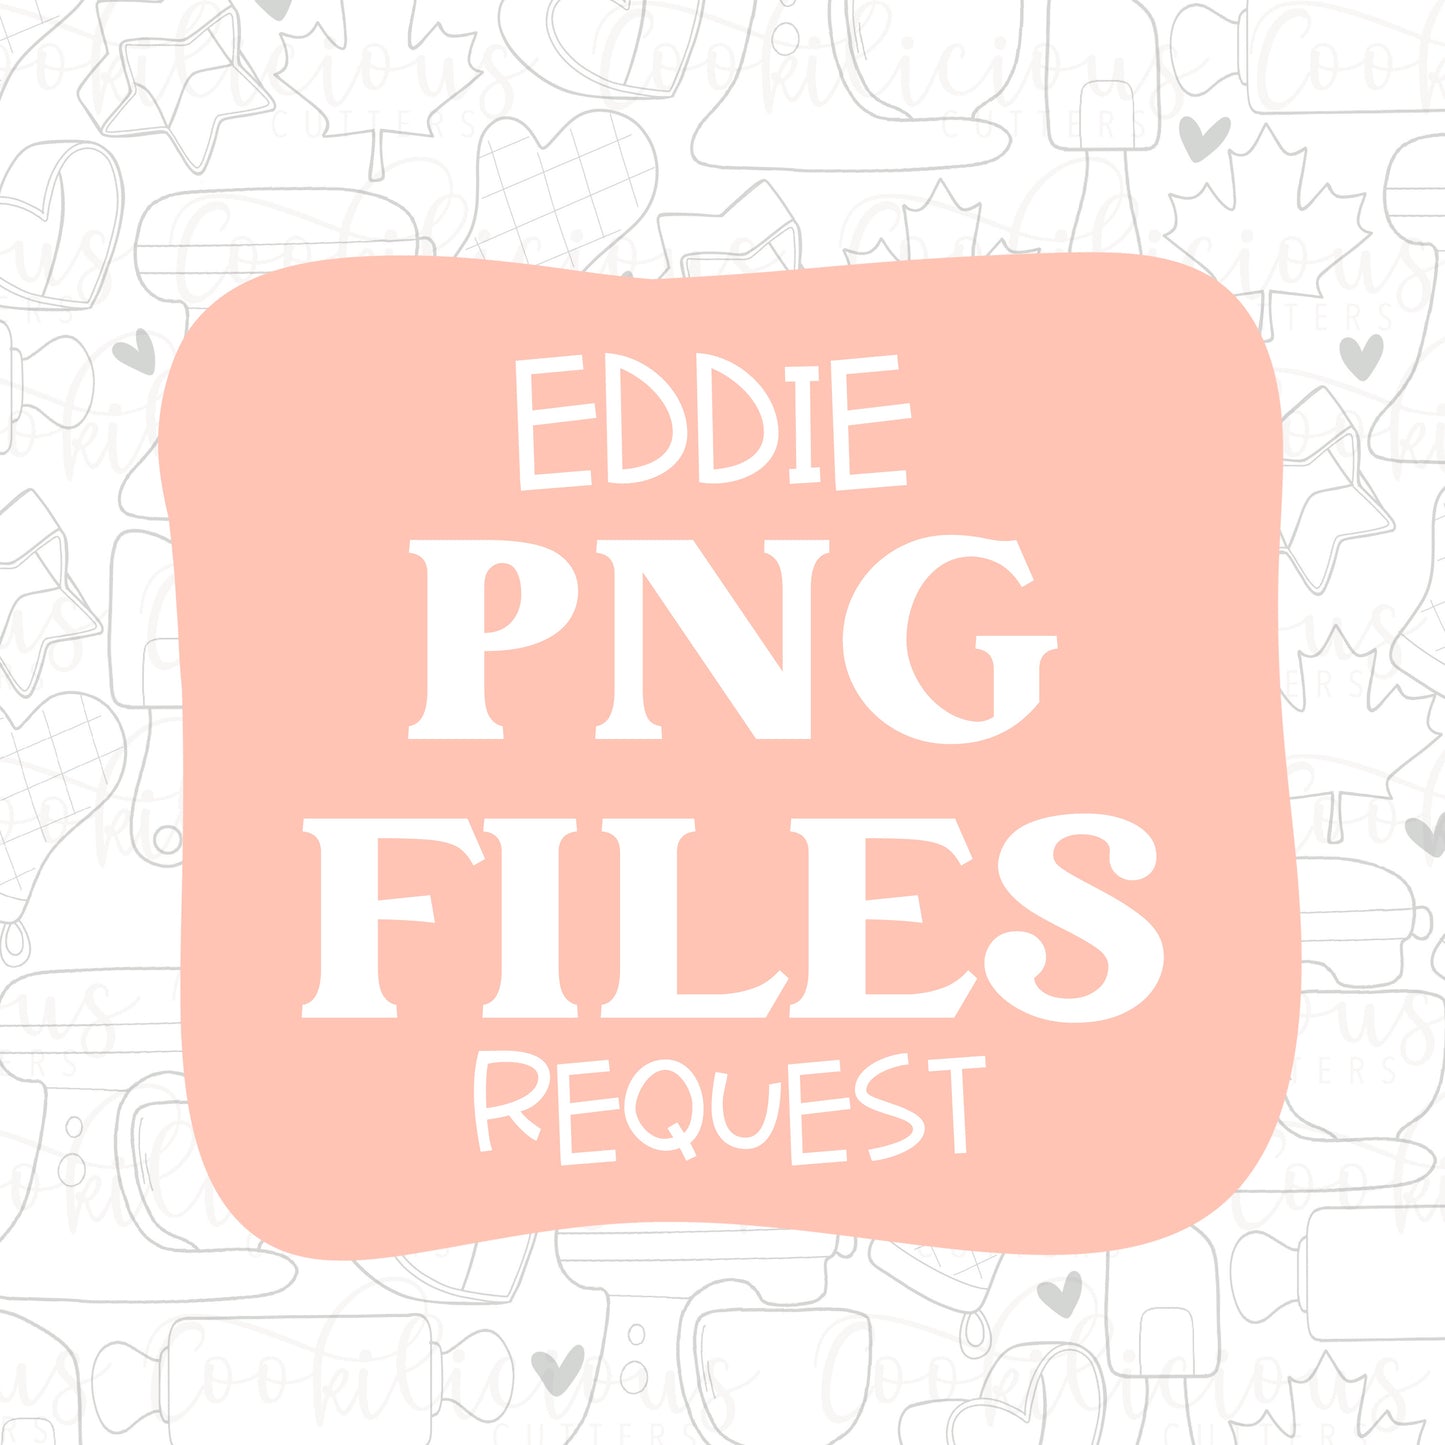 Eddie PNG File Request